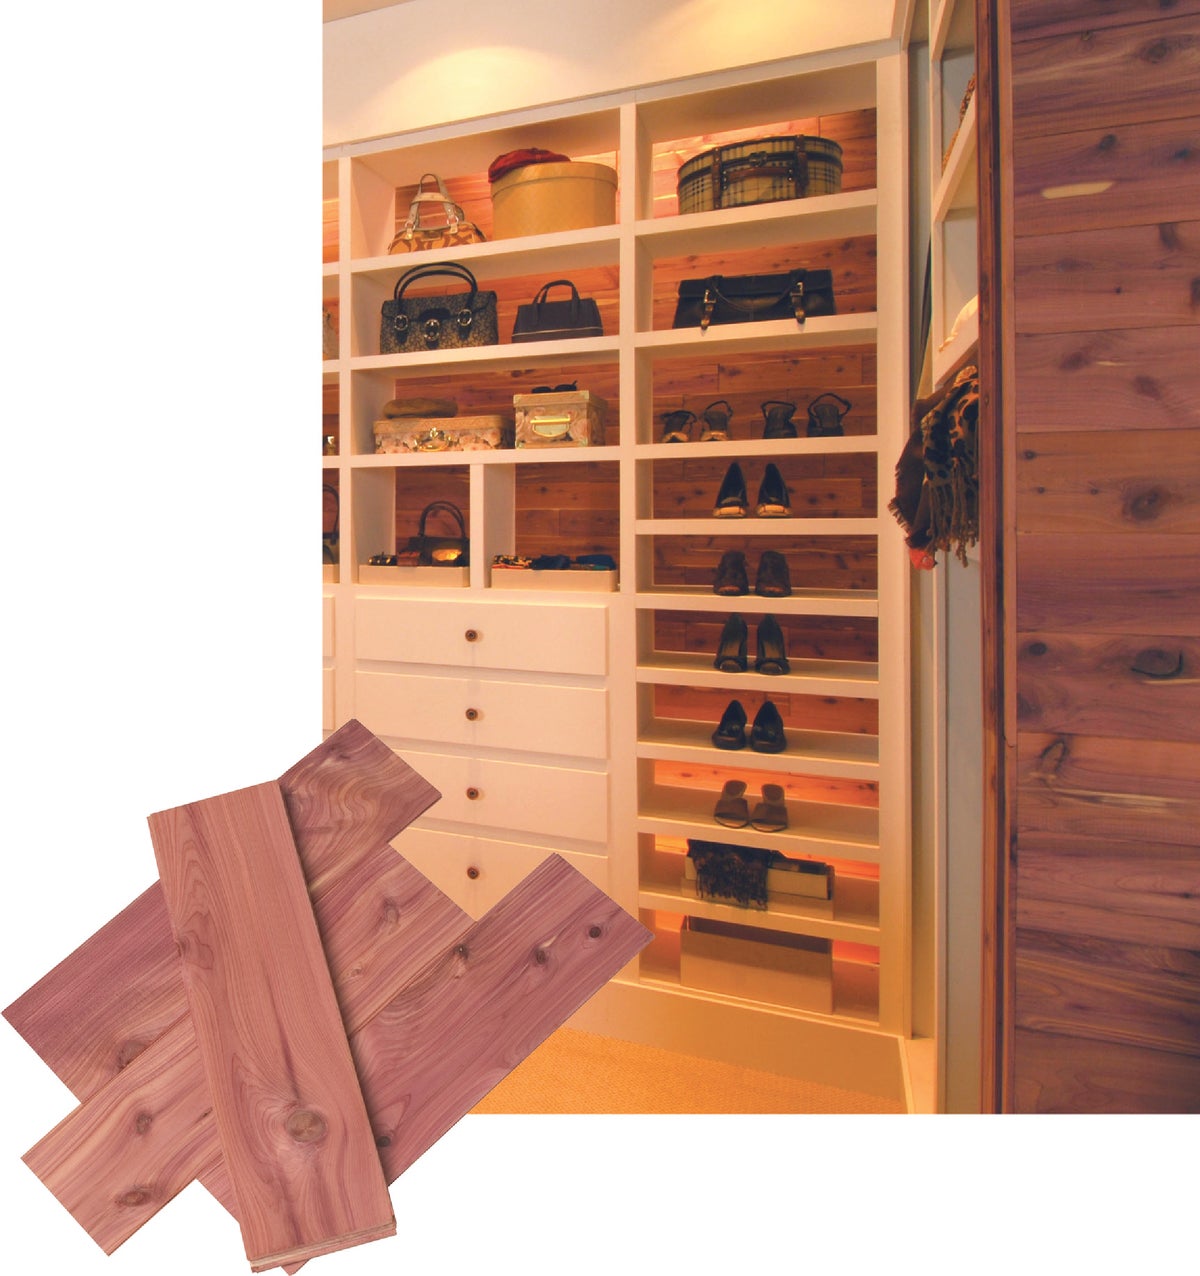 Cedar Planks - CedarSafe Natural Closet Liners